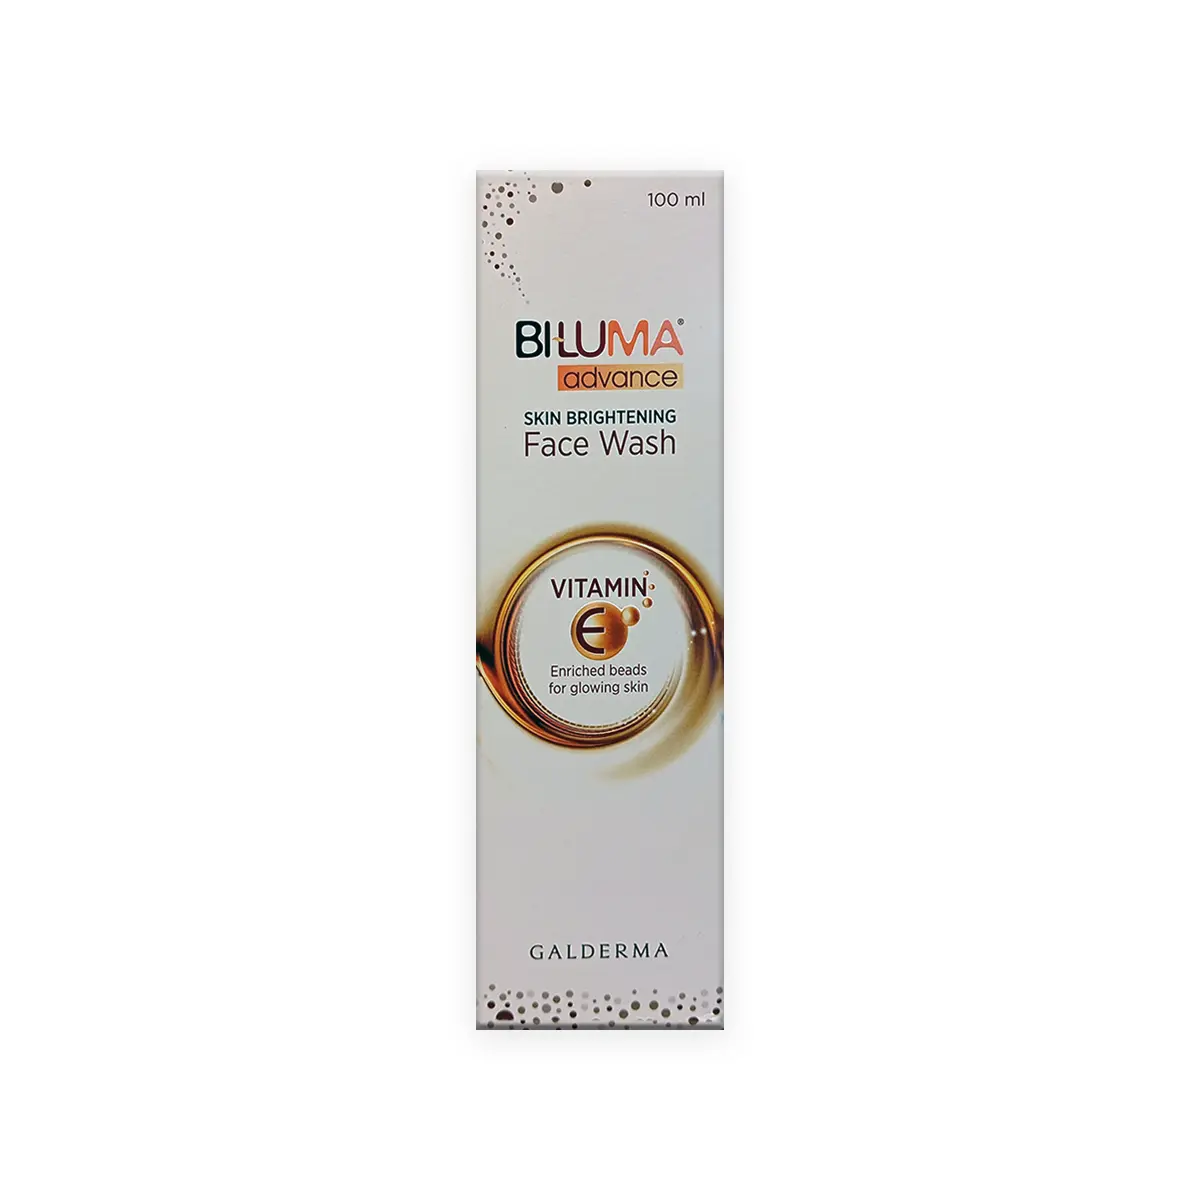 First product image of Biluma Advanced Skin Brightening Face Wash 100ml